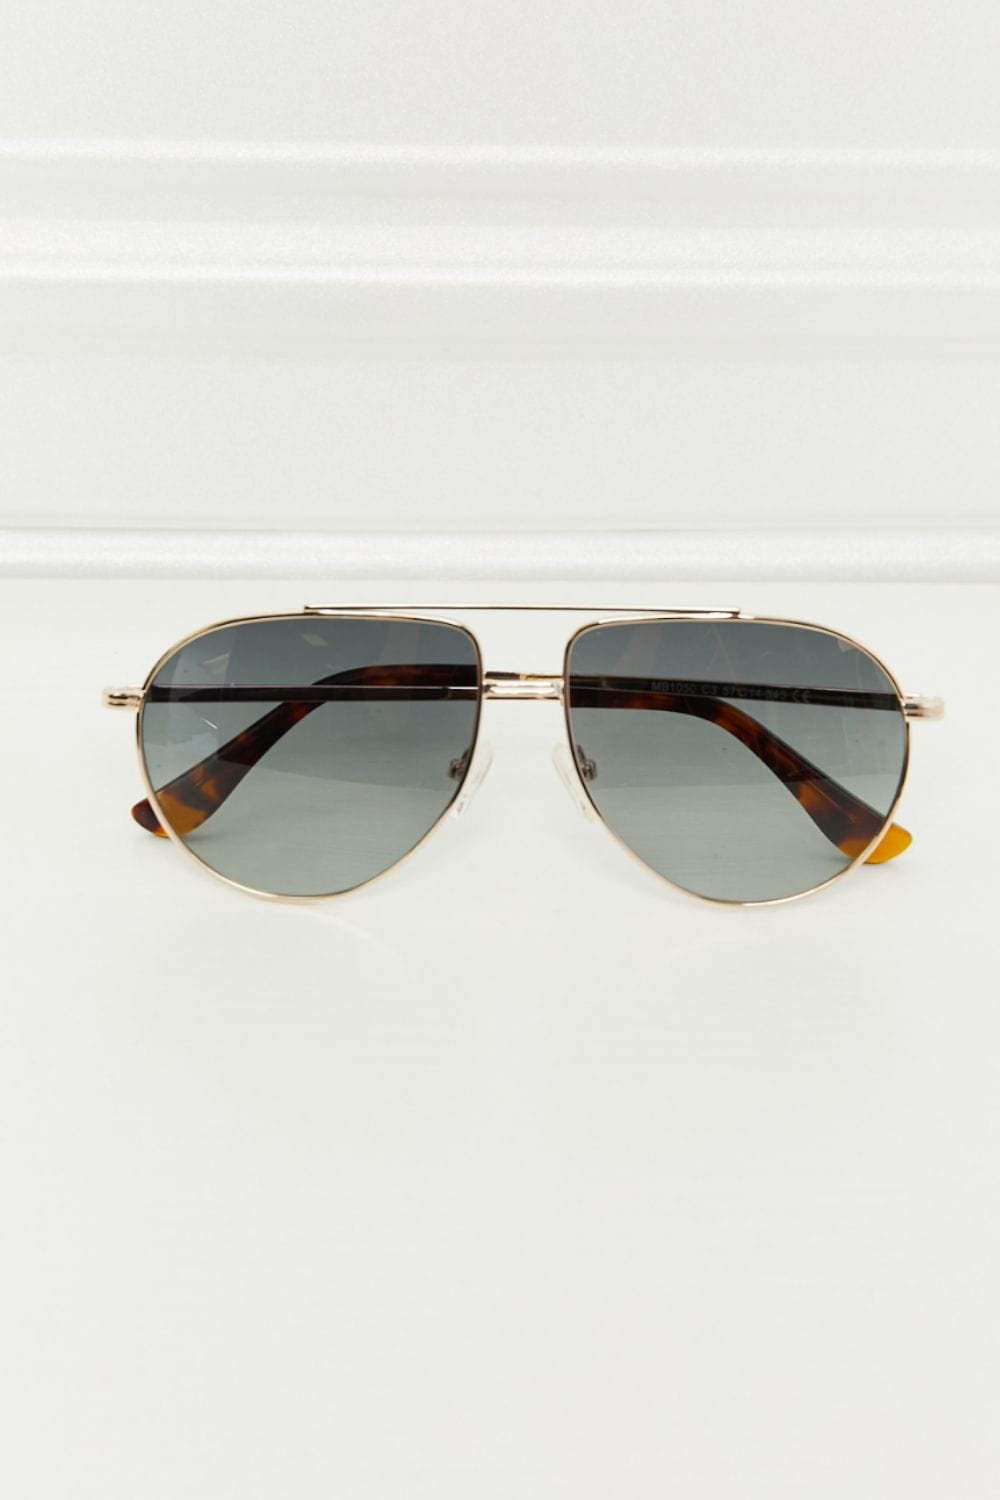 The802Gypsy sunglasses Dark Gray / One Size GYPSY-TAC Polarization Lens Aviator Sunglasses